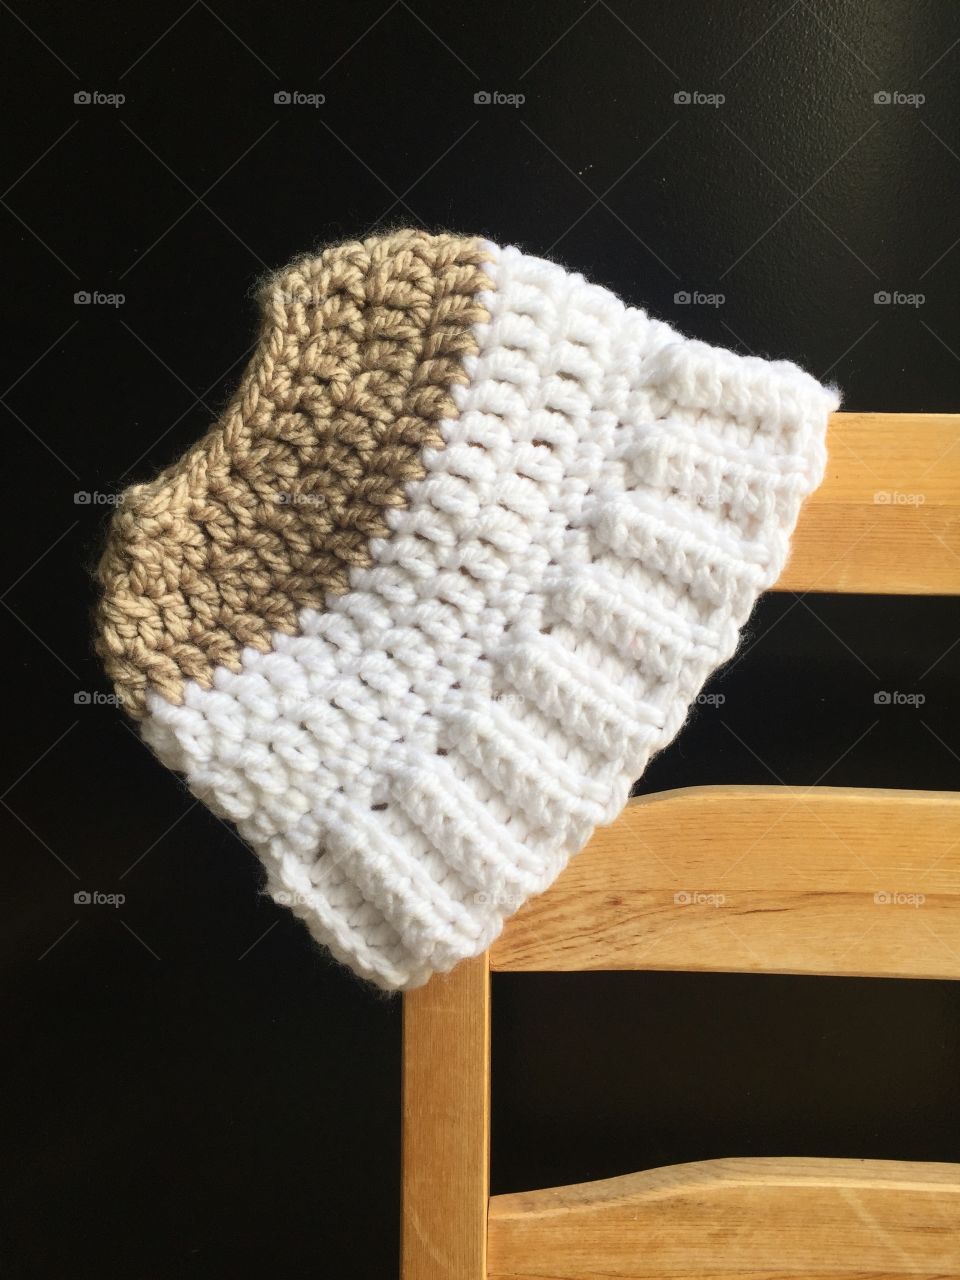 Crochet white and beige beanie